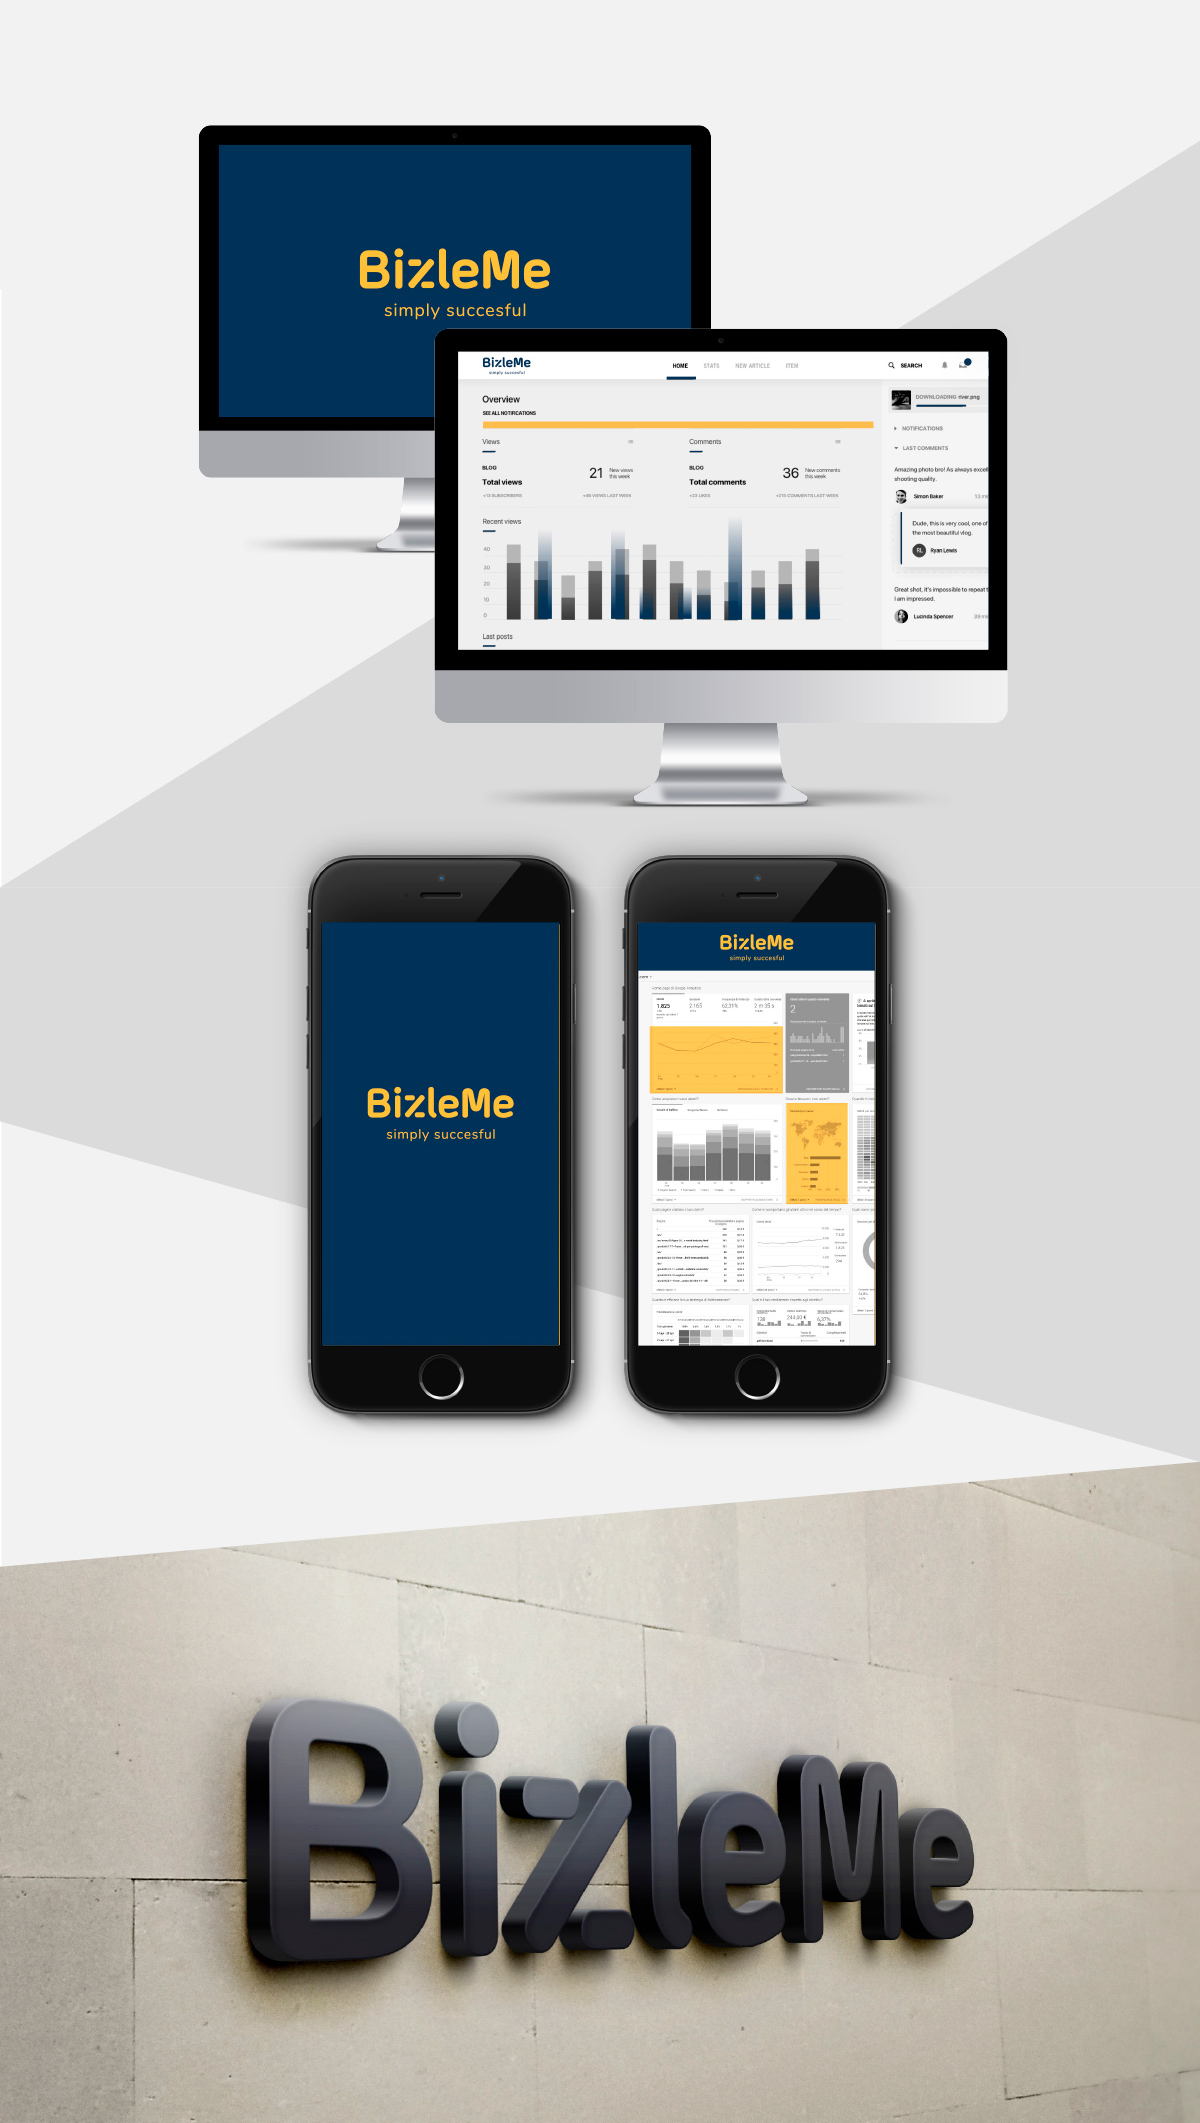 BizleMe Brand identity and Website by Nicola Sancisi - Creative Work - $i